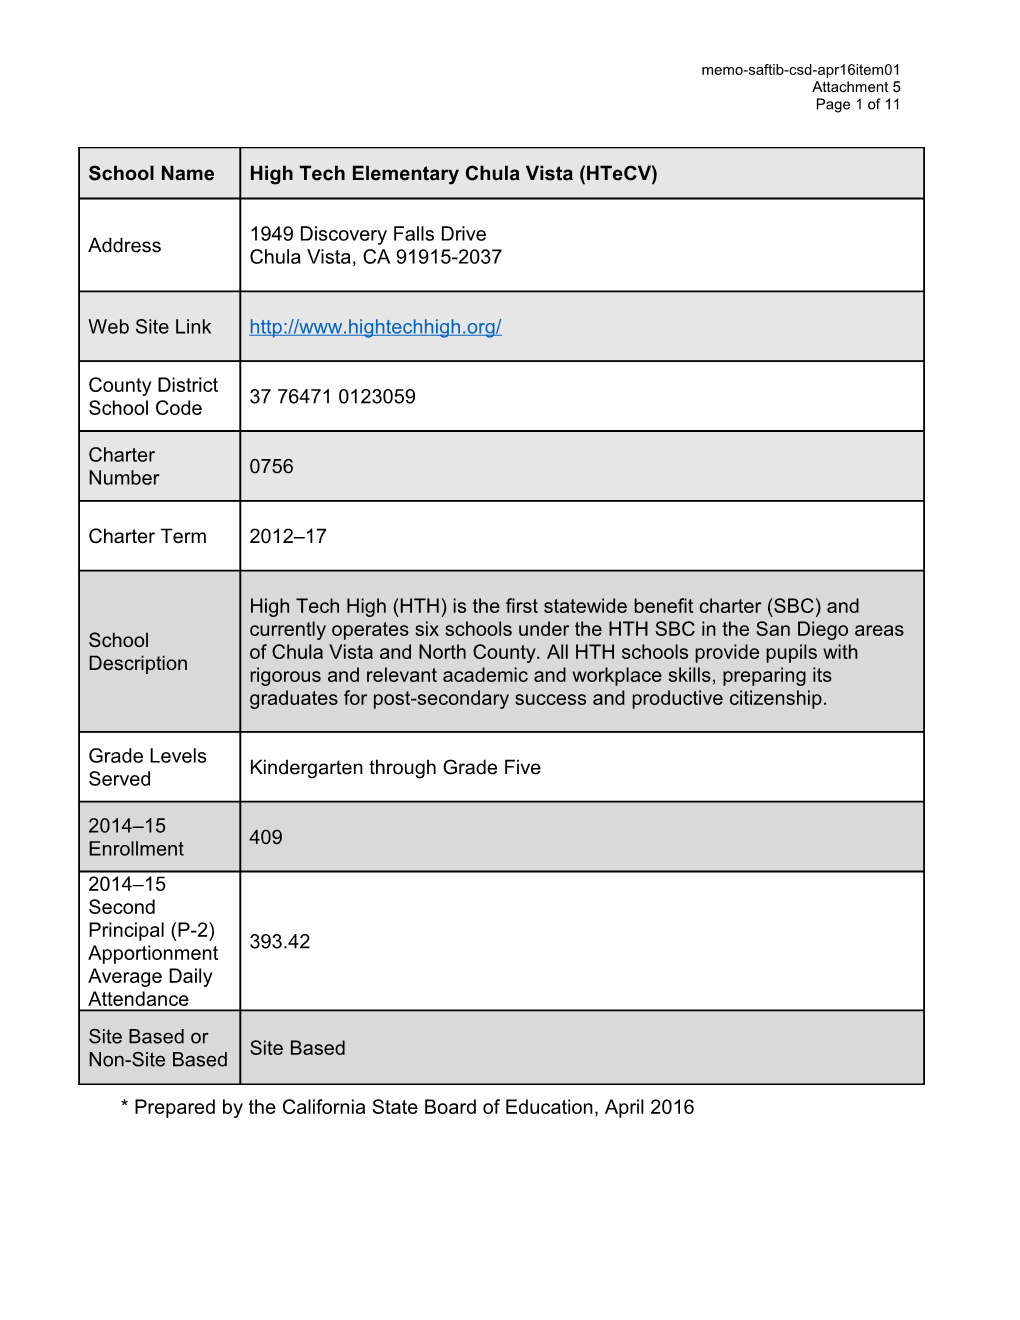 April 2016 Memo CSD Item 01 Attachment 5 - Information Memorandum (CA State Board of Education)